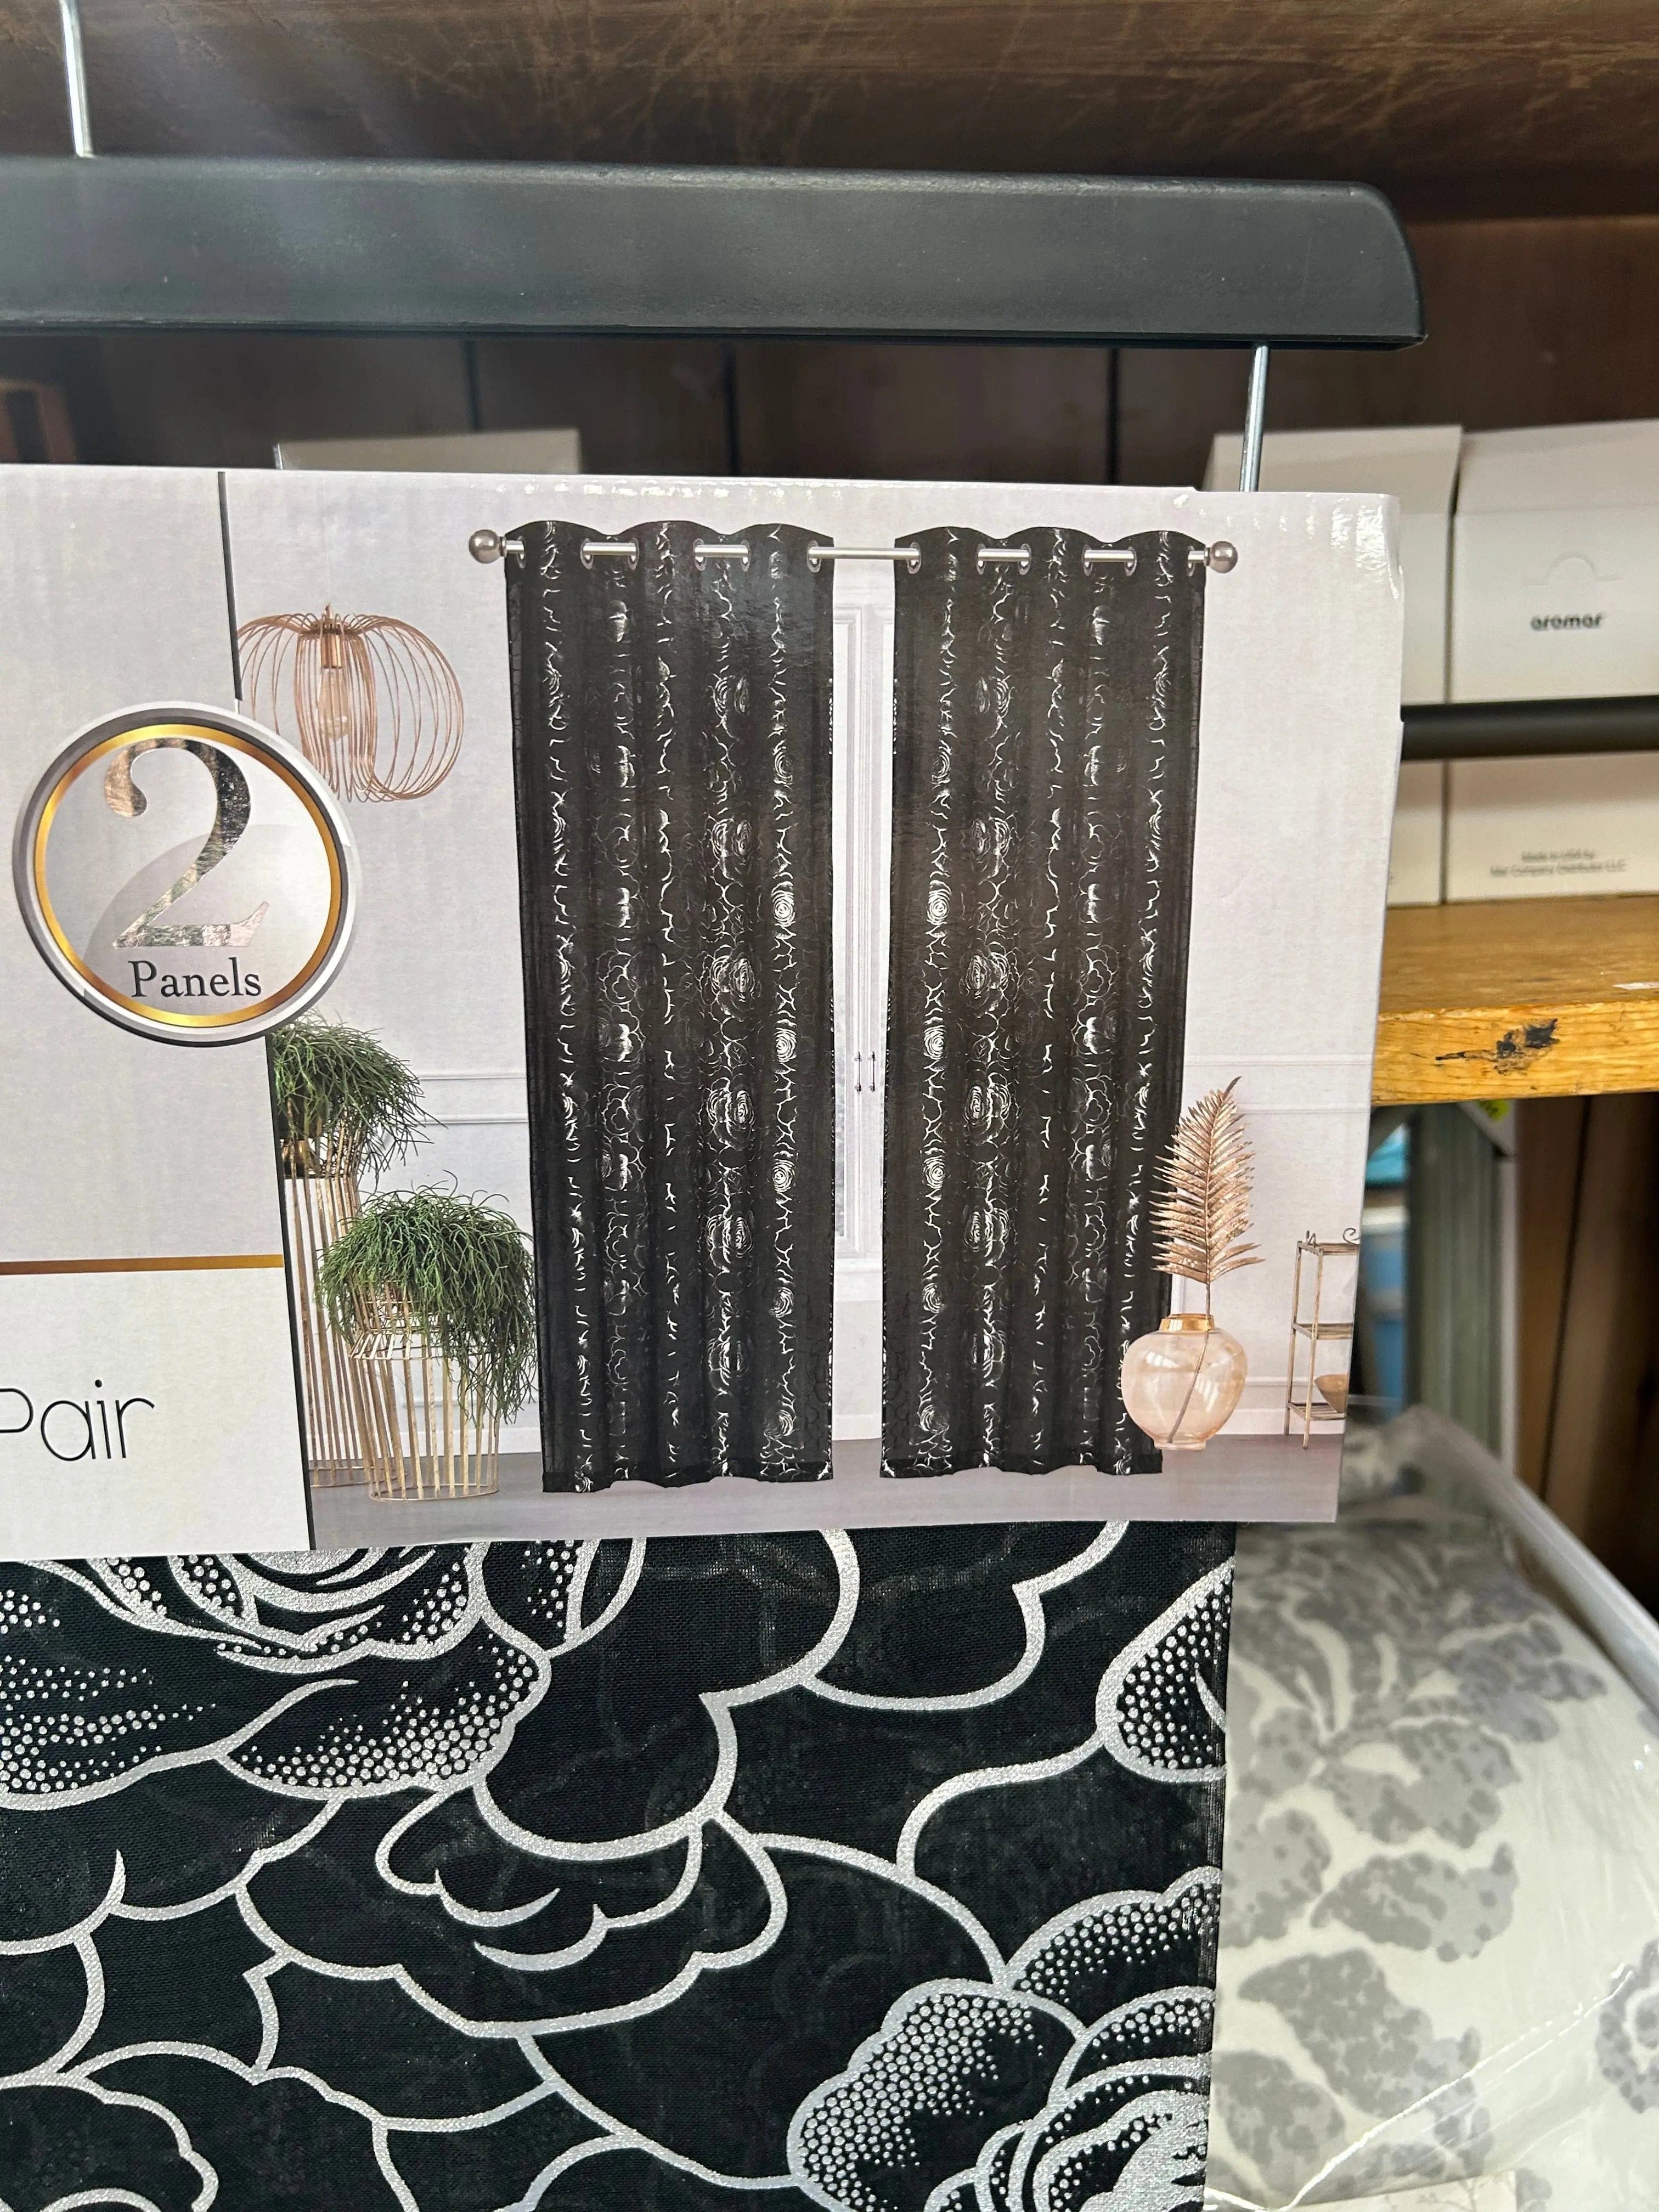 Linen World ‘Cynthia’ 2 Pack Metallic Flower Sheer Grommets Curtain Panels